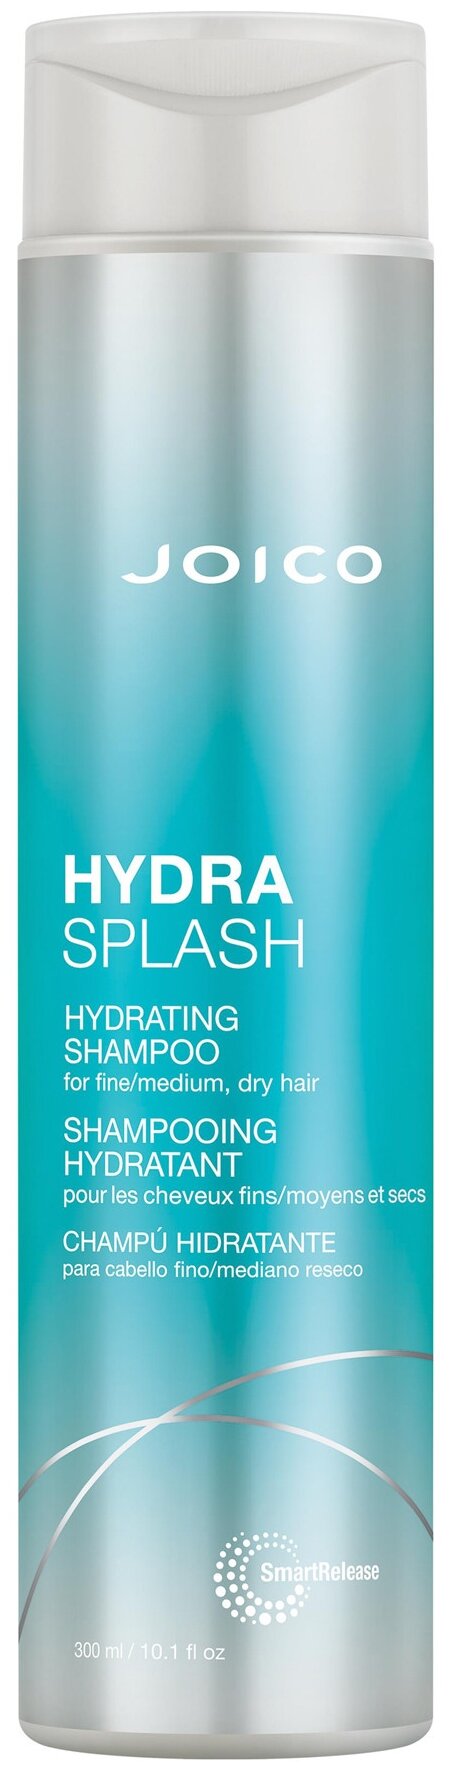 Joico шампунь HydraSplash для тонких и сухих волос, 300 мл